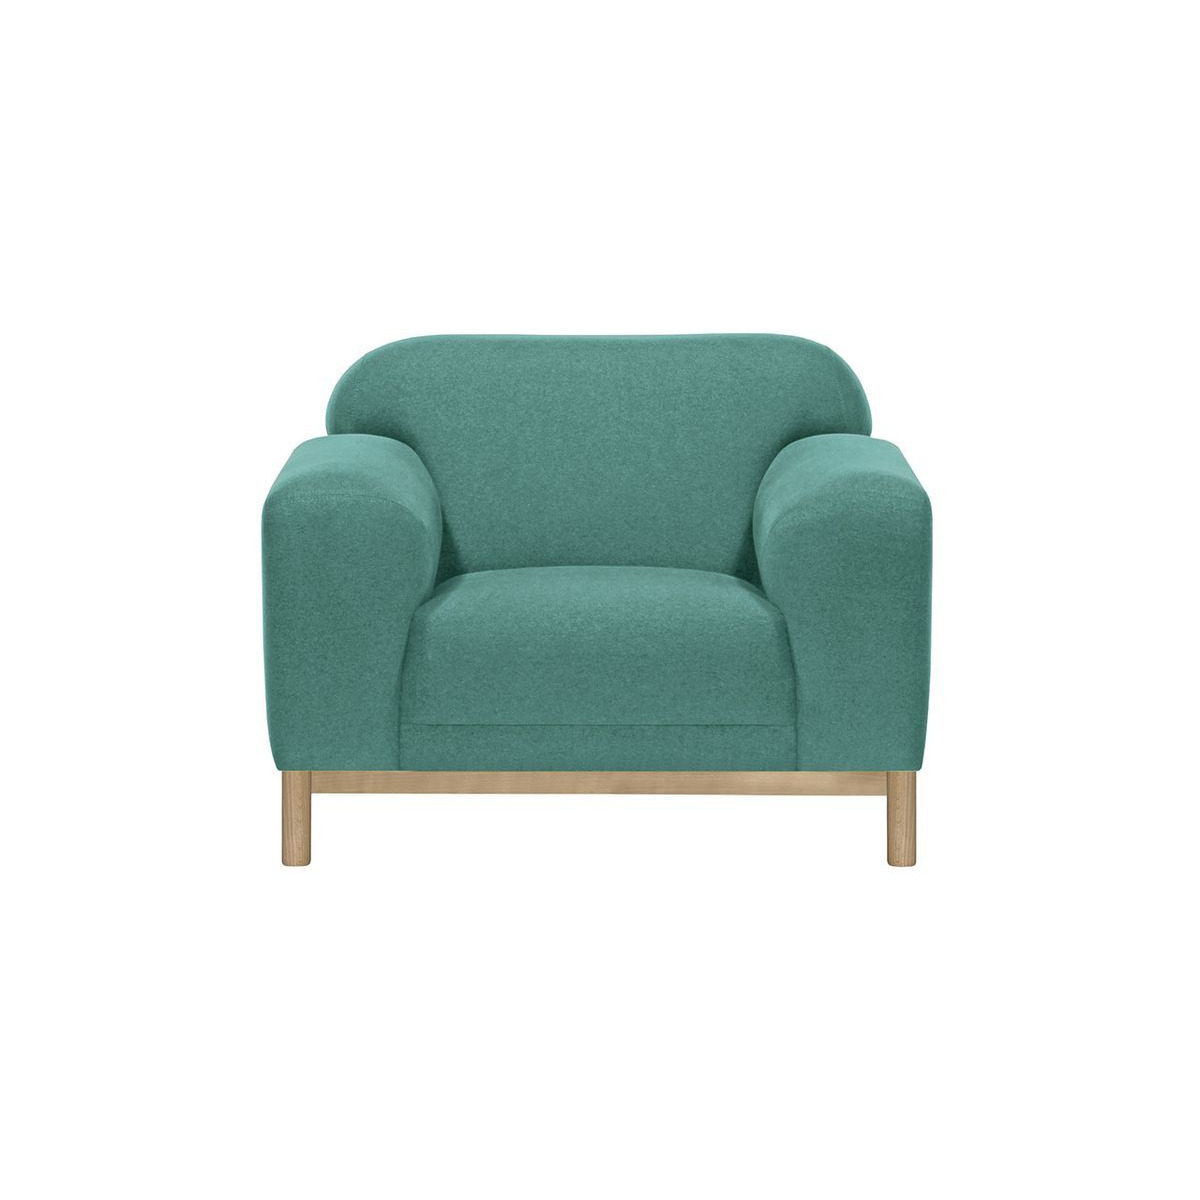 Sepia Armchair, light blue - image 1